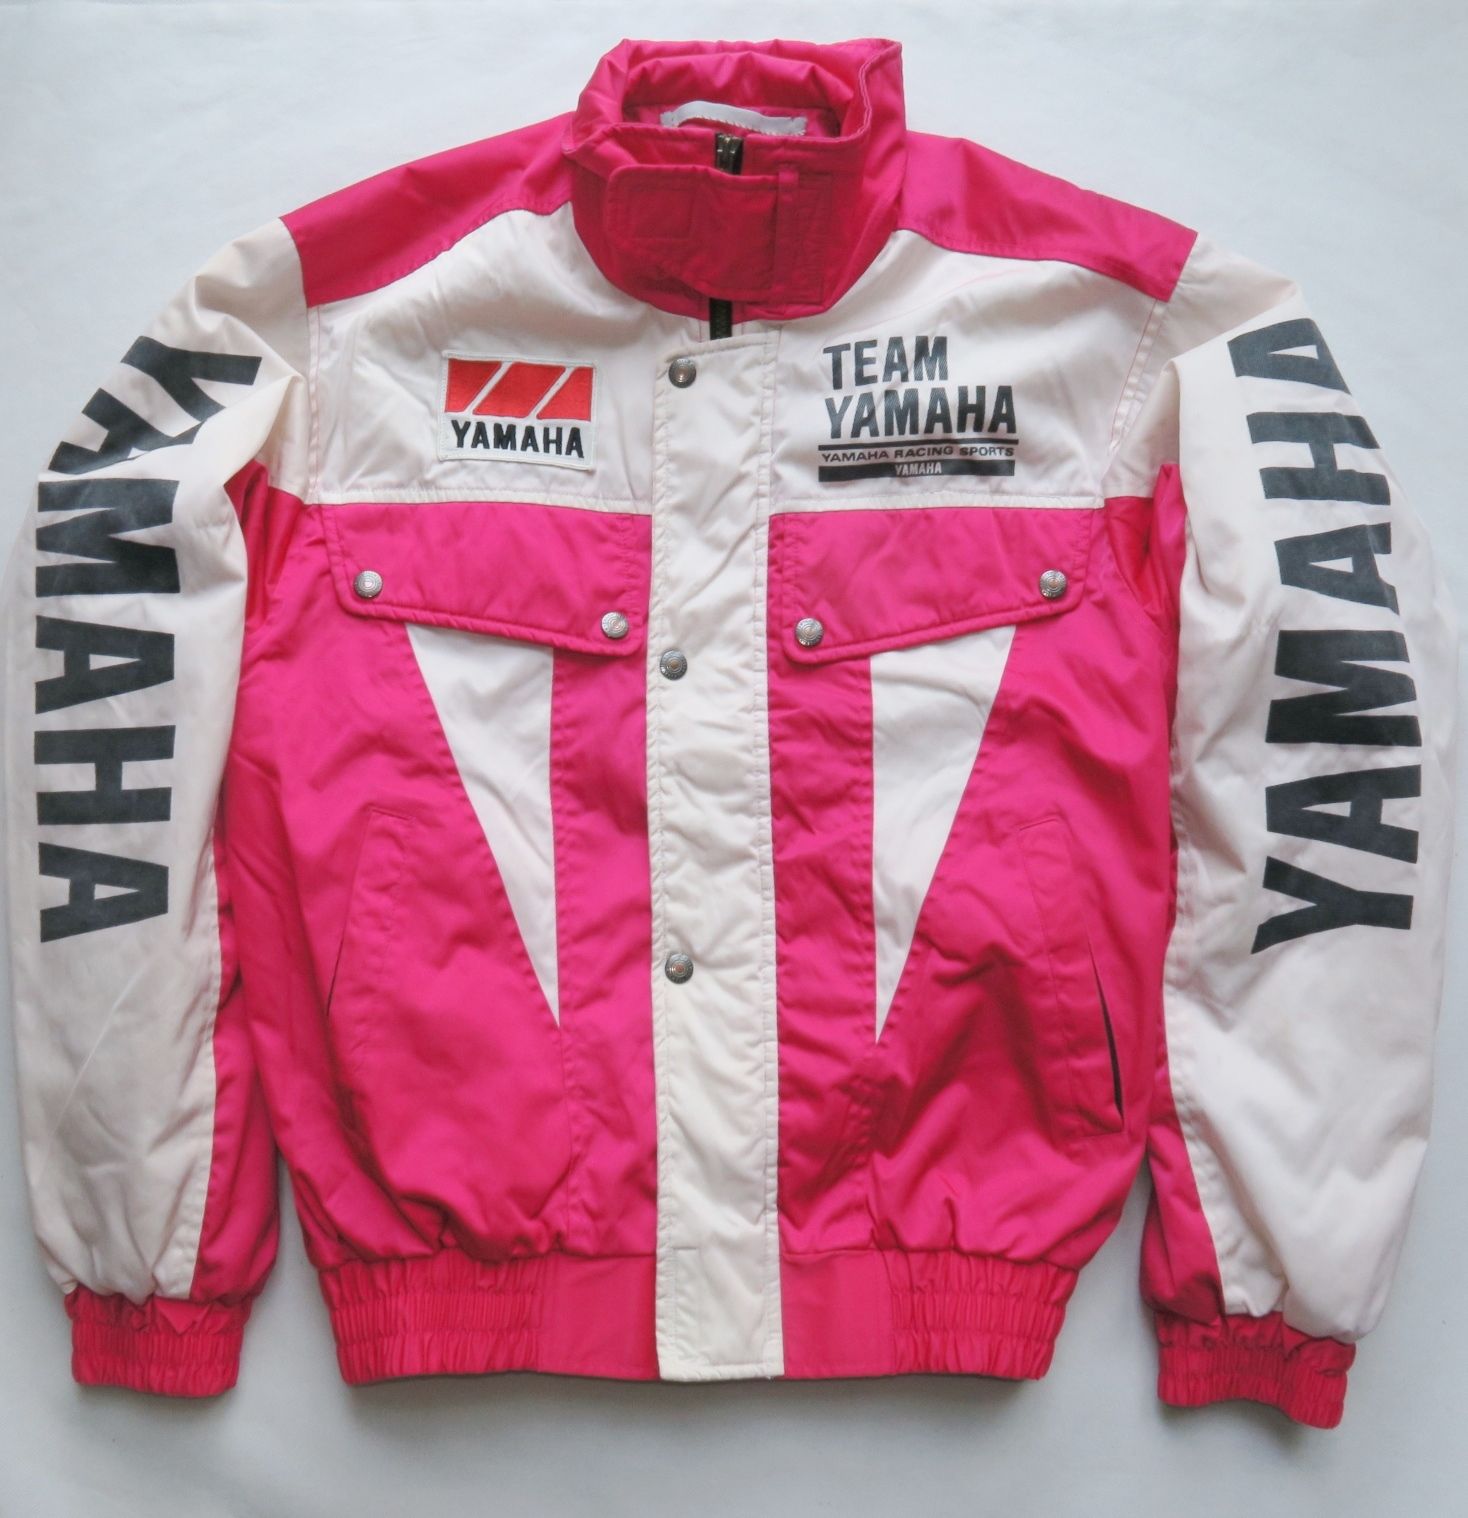 Yamaha Vintage Yamaha winter jacket racing red and white | Grailed